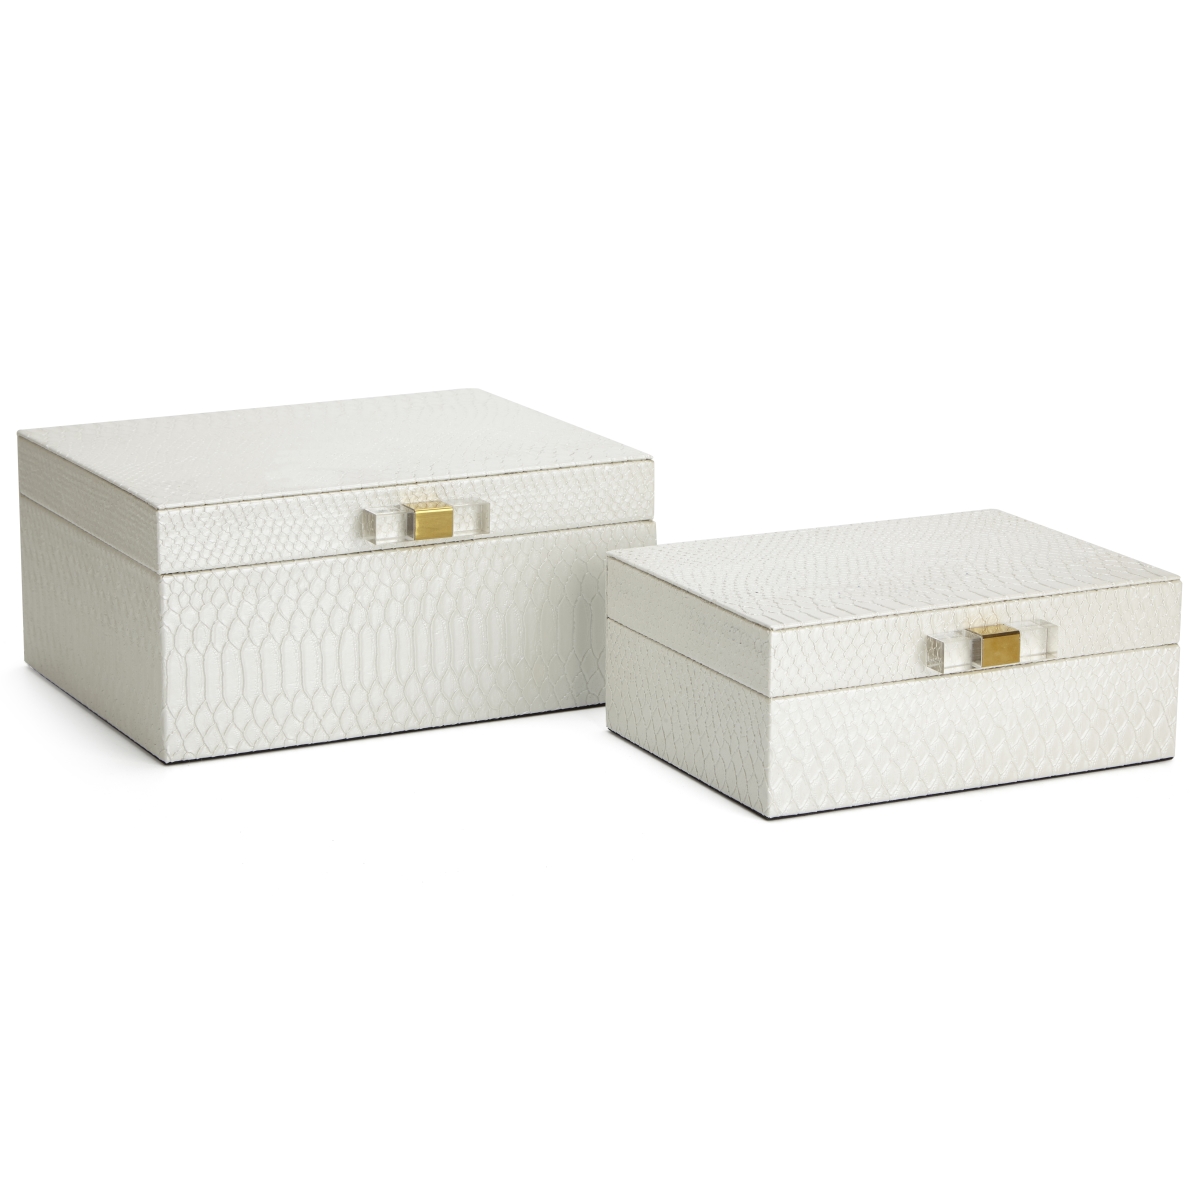 Imax Z65572-2 Helga White Jewelry Boxes - Set Of 2